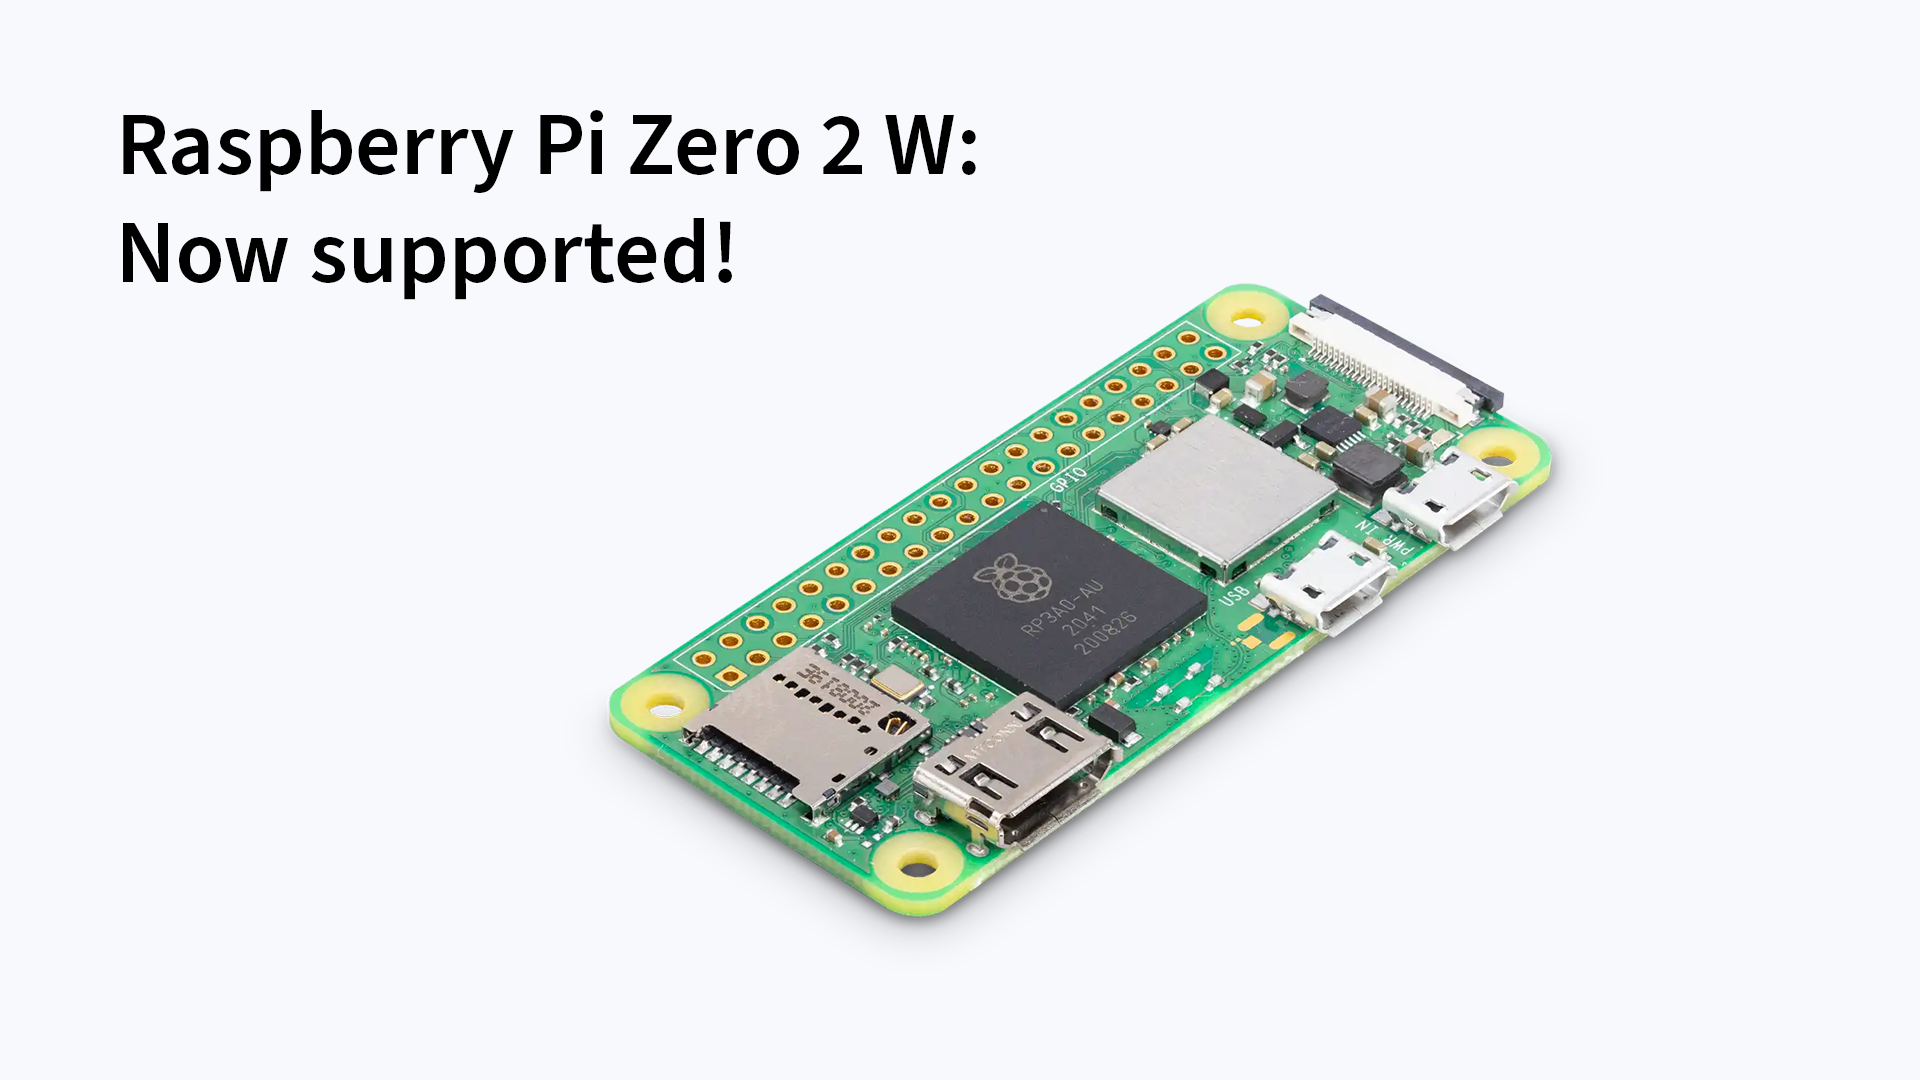 balenaCloud now supports the Pi Zero 2 W